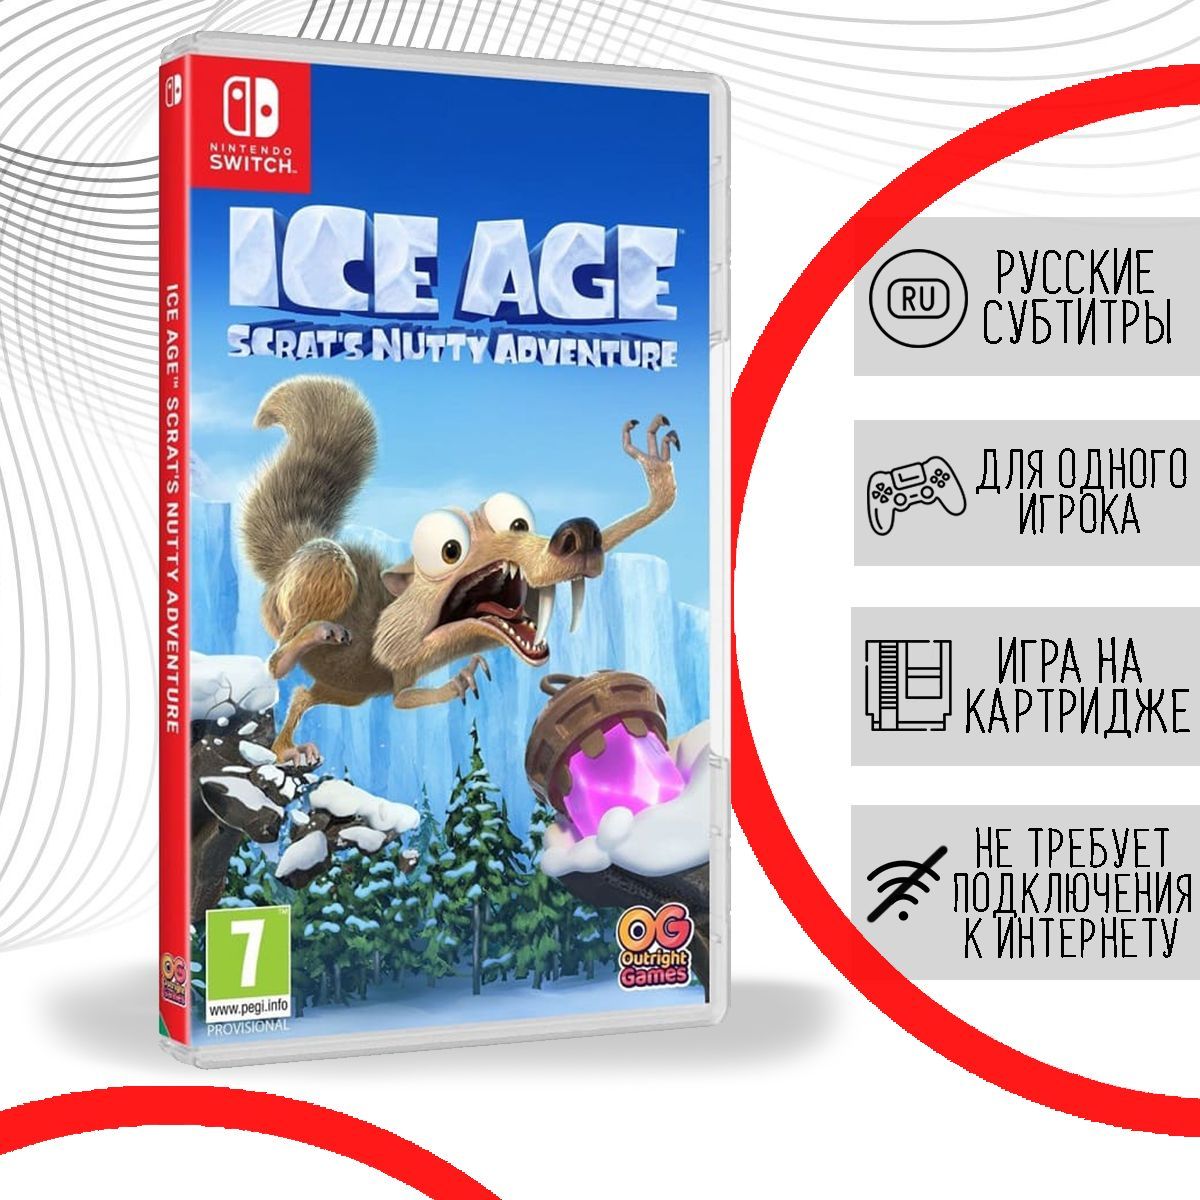 Ice age scrat's nutty adventure cheats